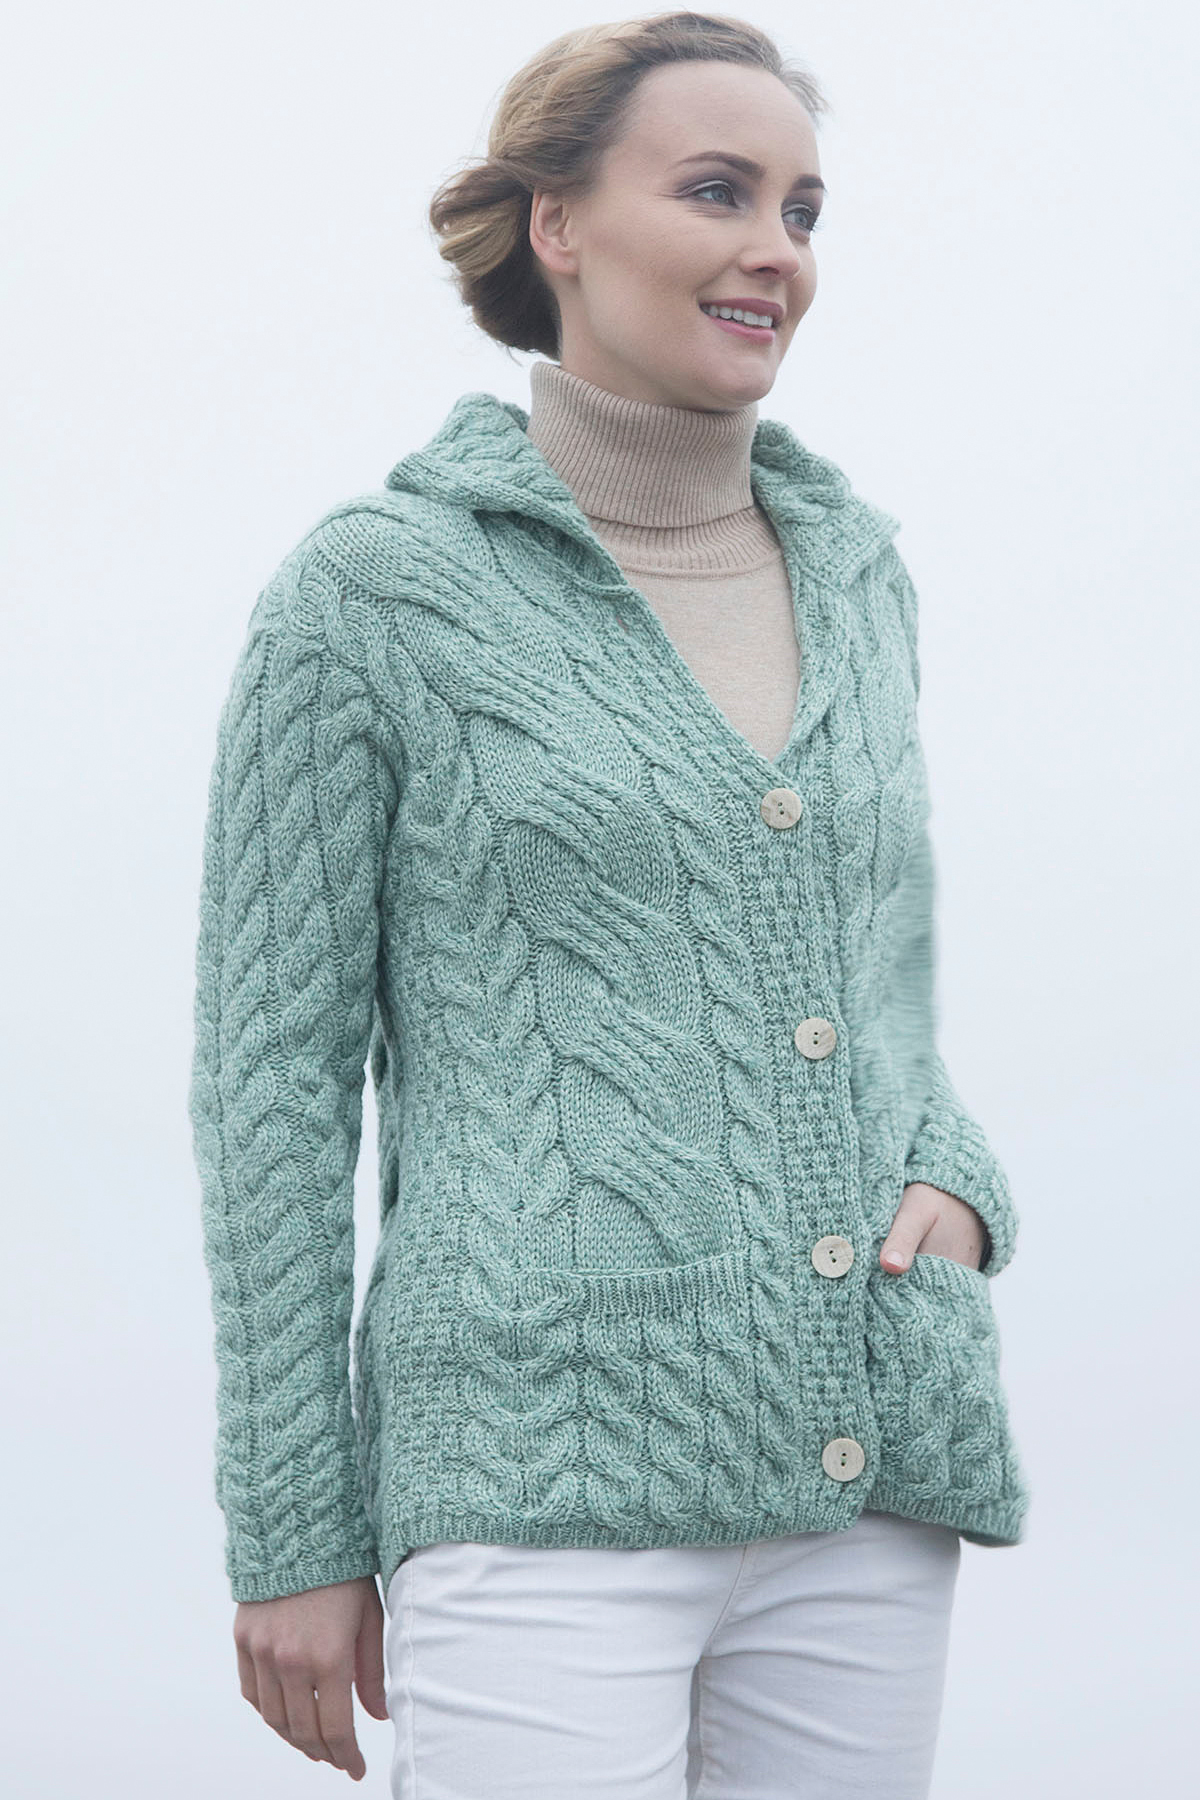 Carraig Donn Aran Woollen Mills Irish Aran Wool Sweater Womens Cable Knit Buttoned Cardigan Sweater